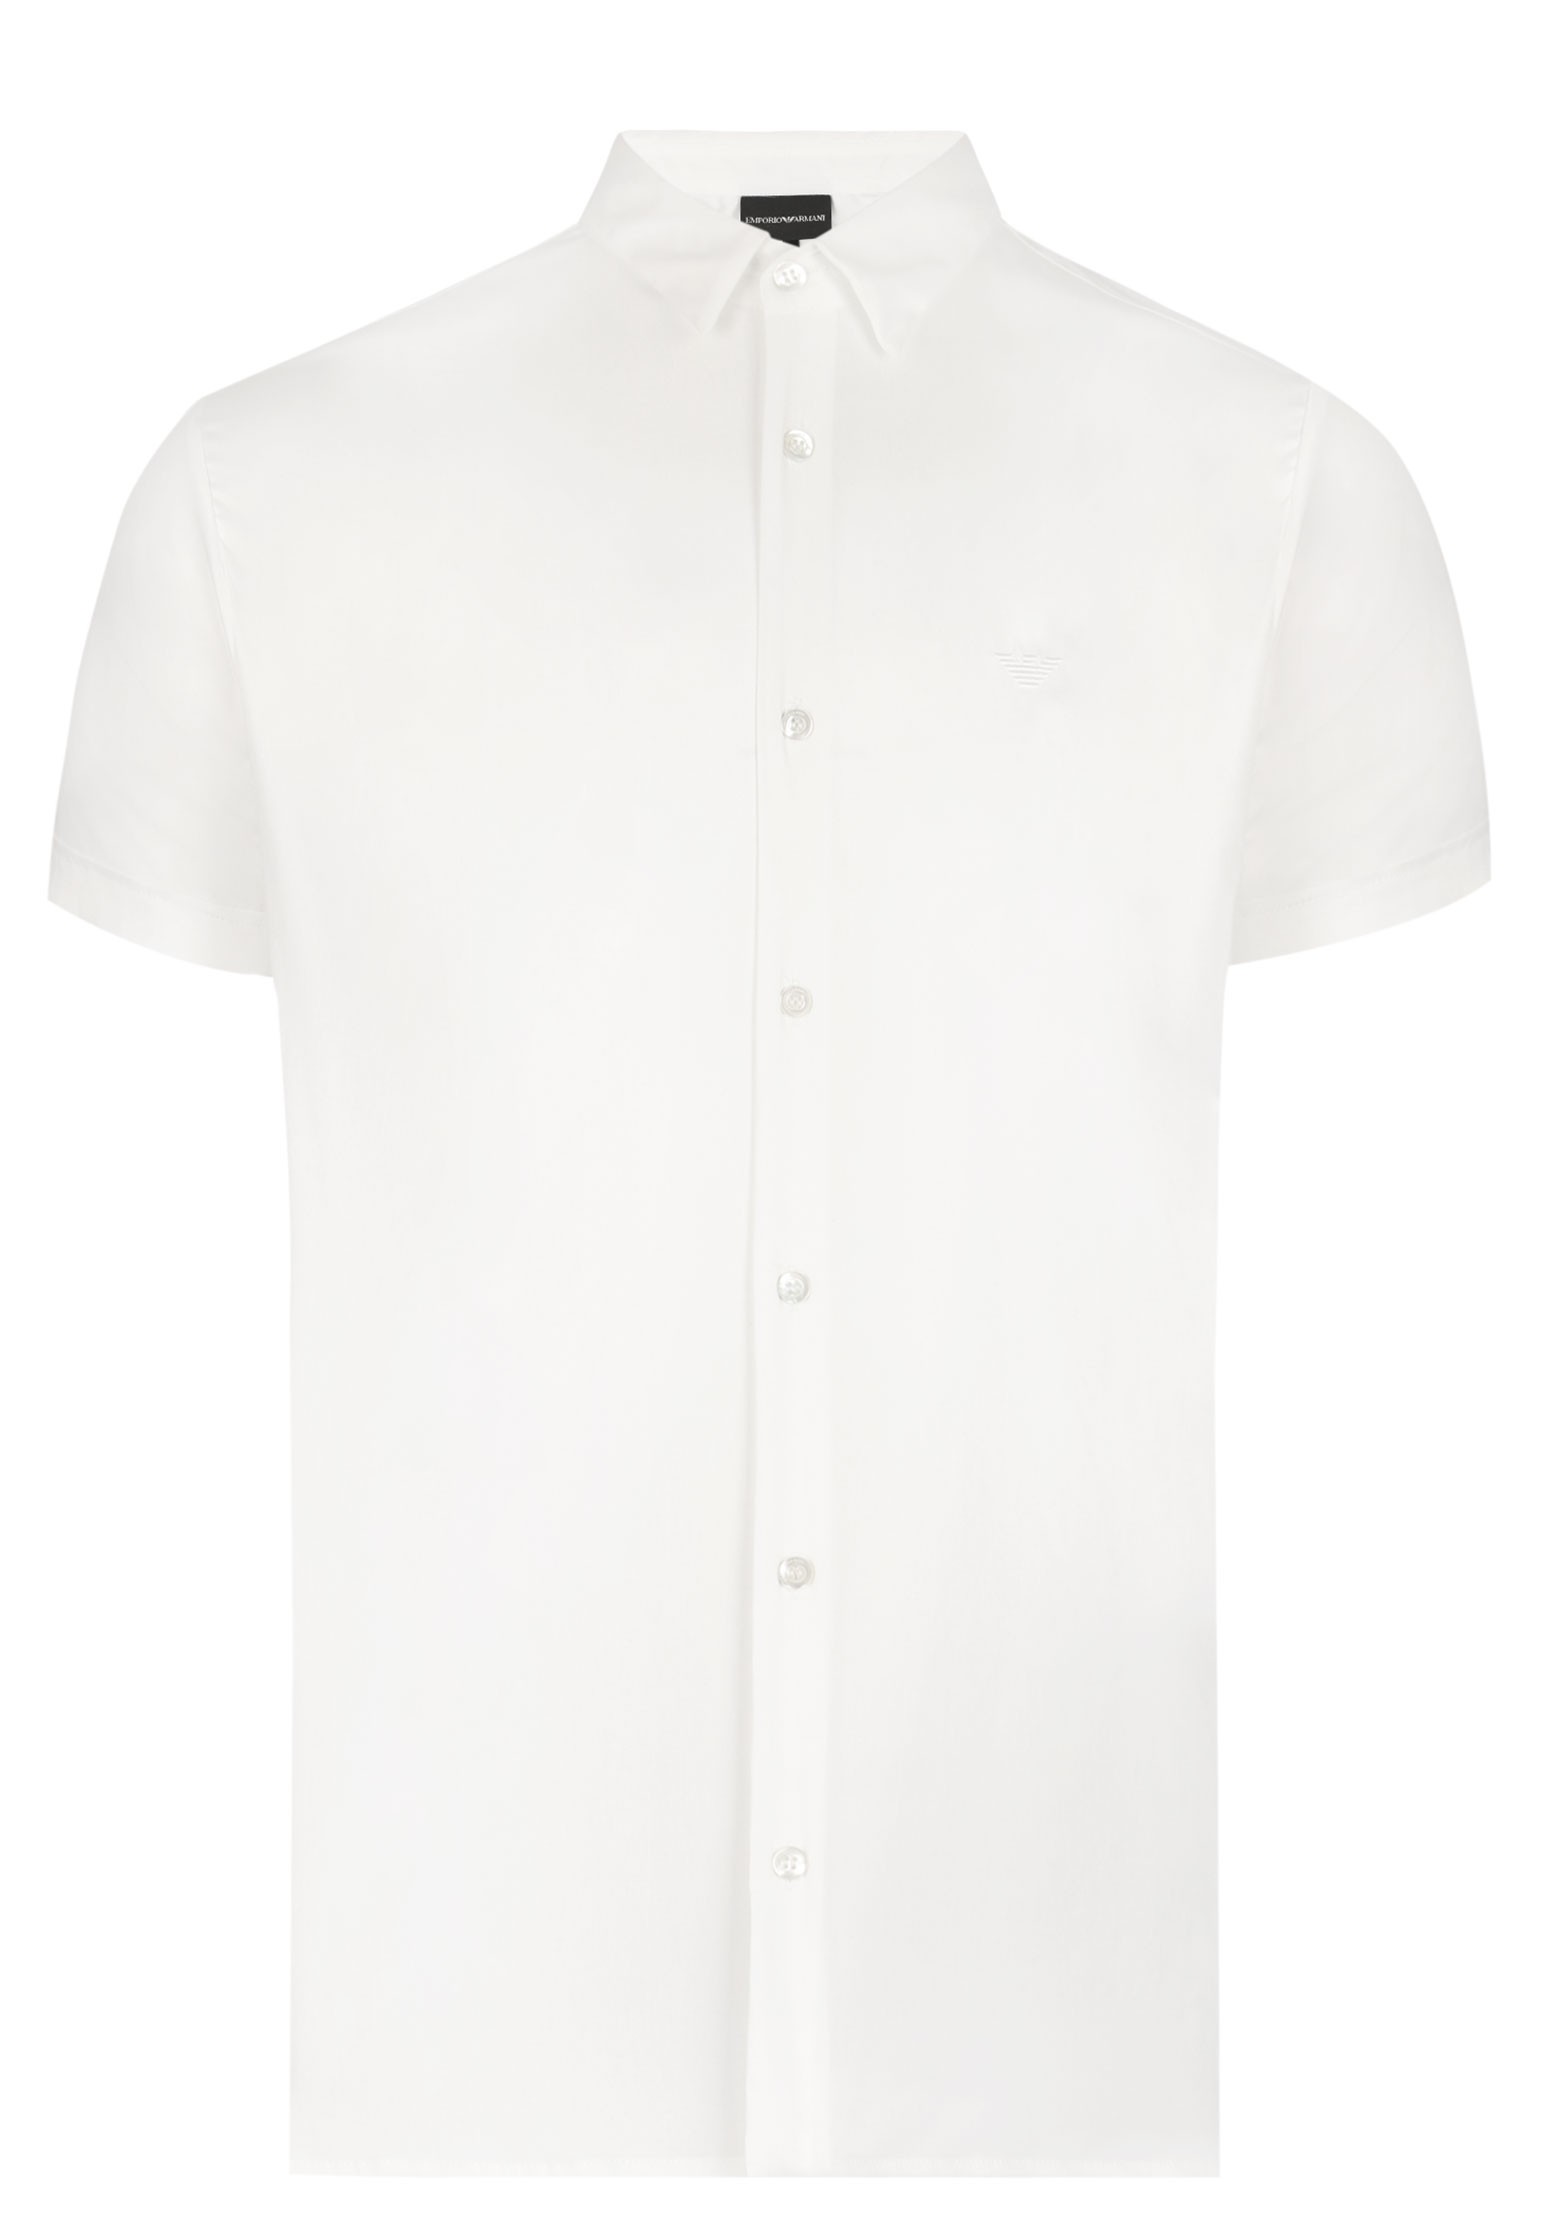 Рубашка мужская Emporio Armani 126902 белая S